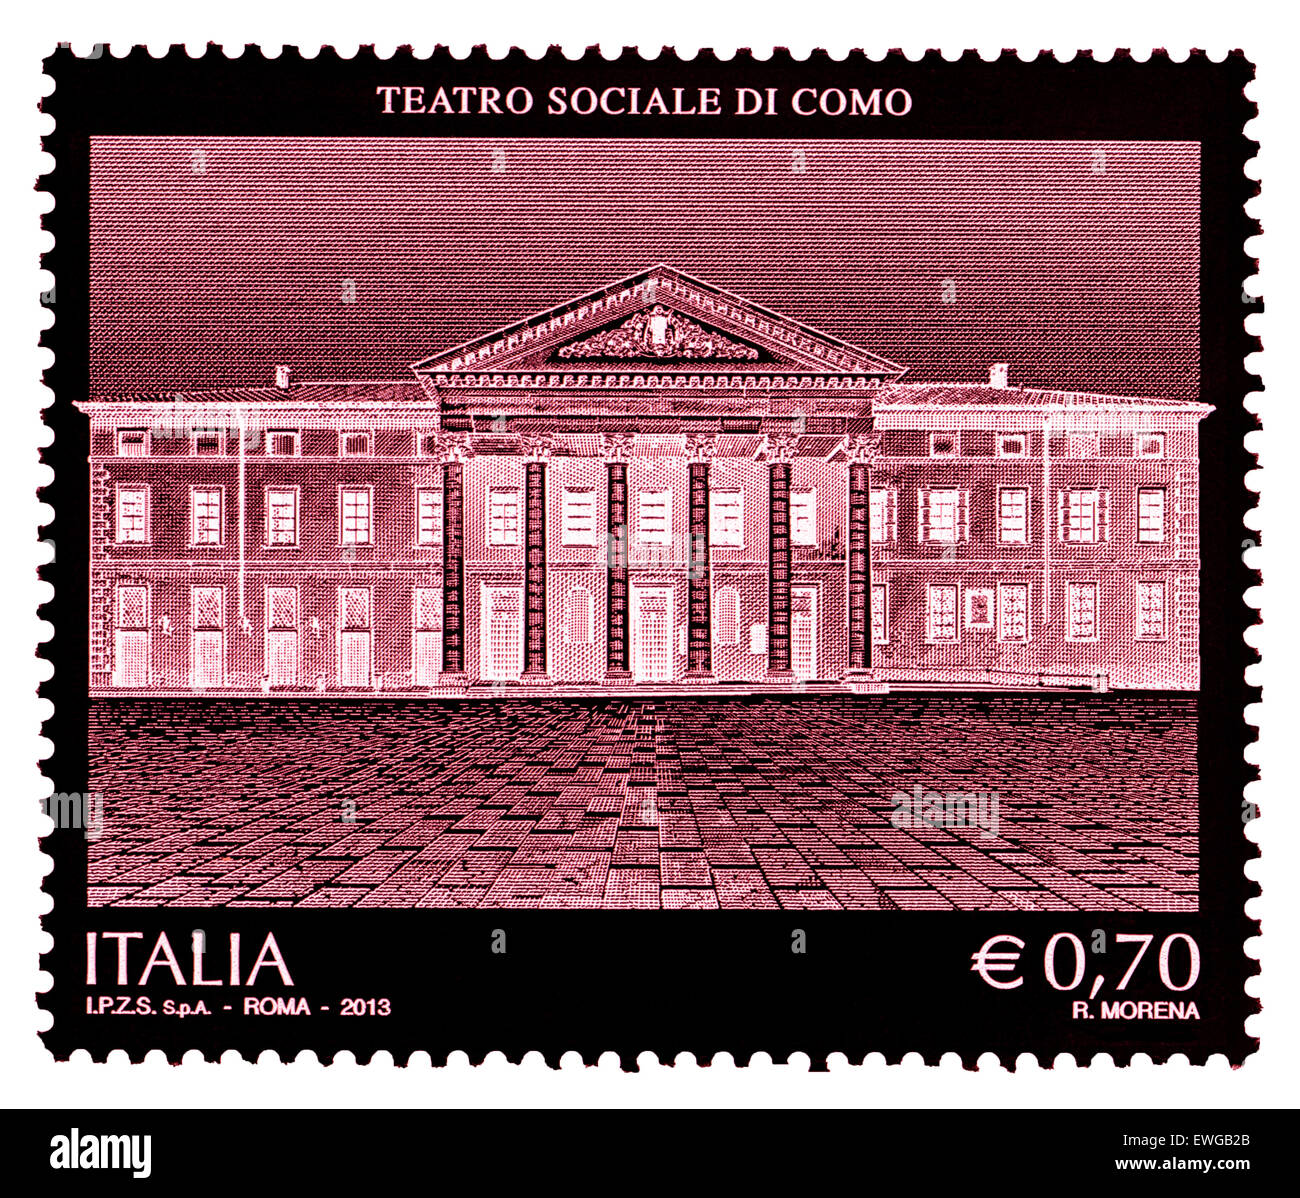 Teatro Sociale ist ein Theater in Como, entworfen vom Architekten Giuseppe Cusi. Stockfoto